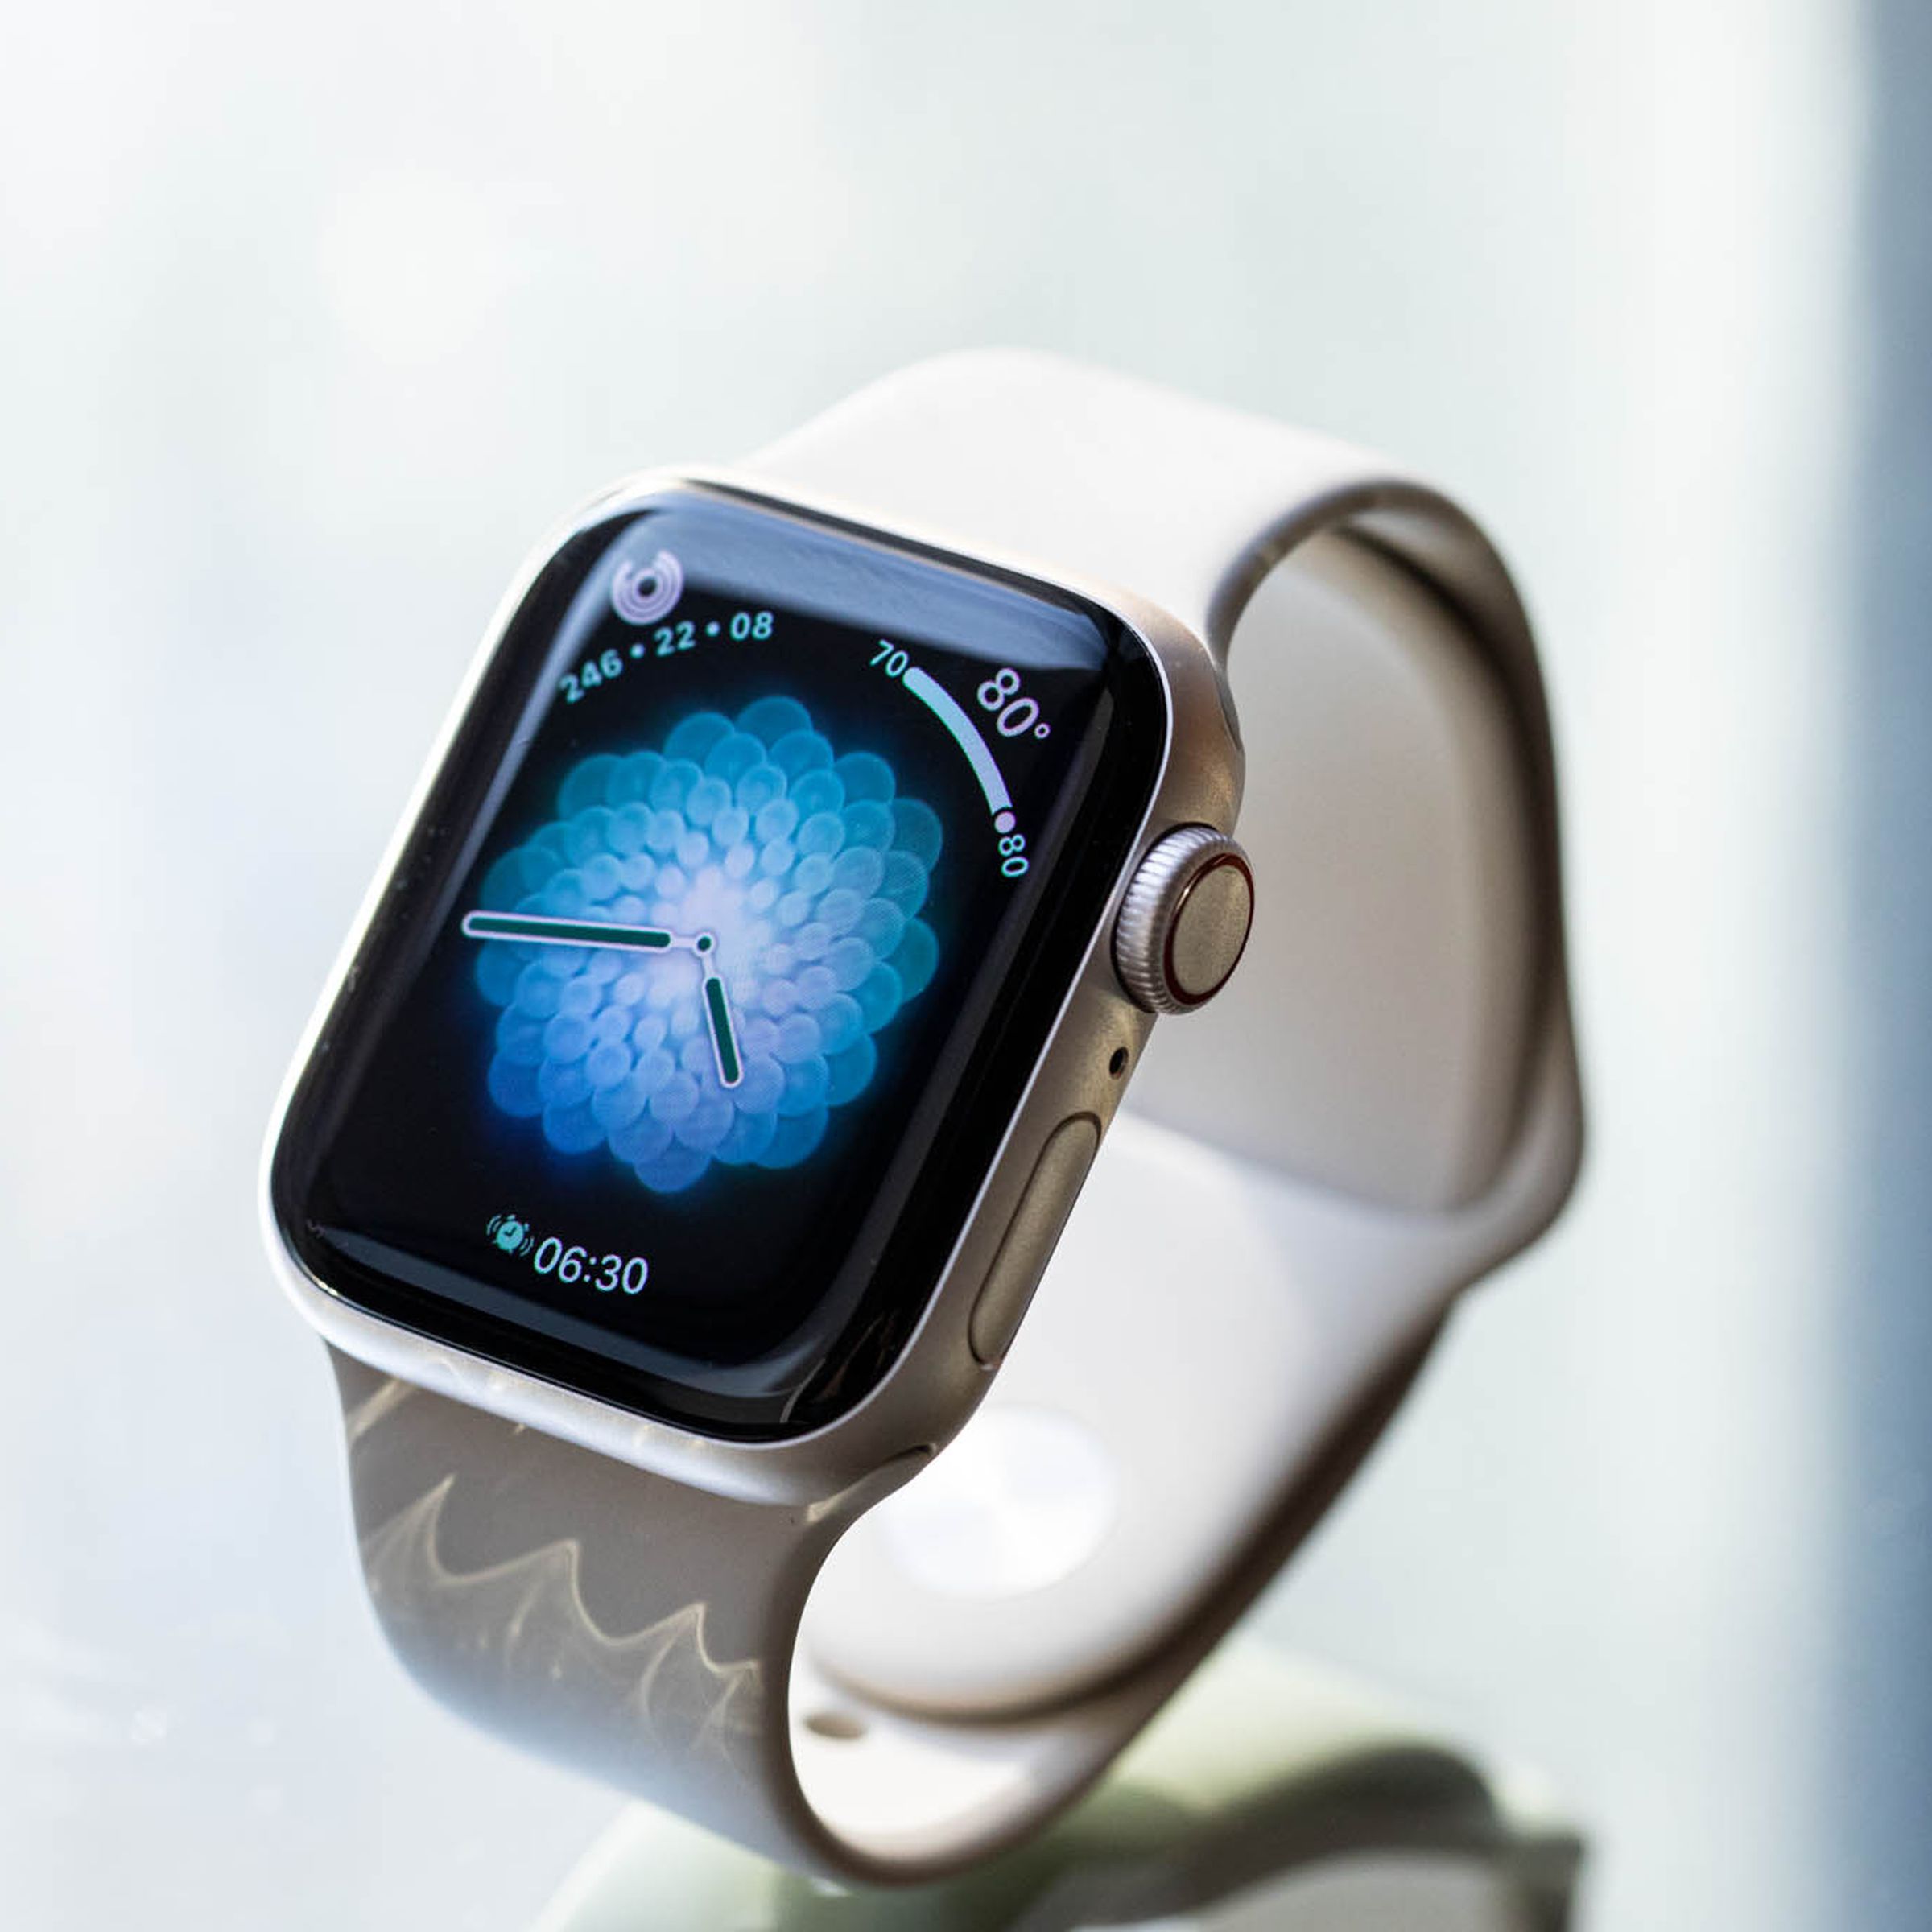 Apple Watch with Breathe Display in black bezel